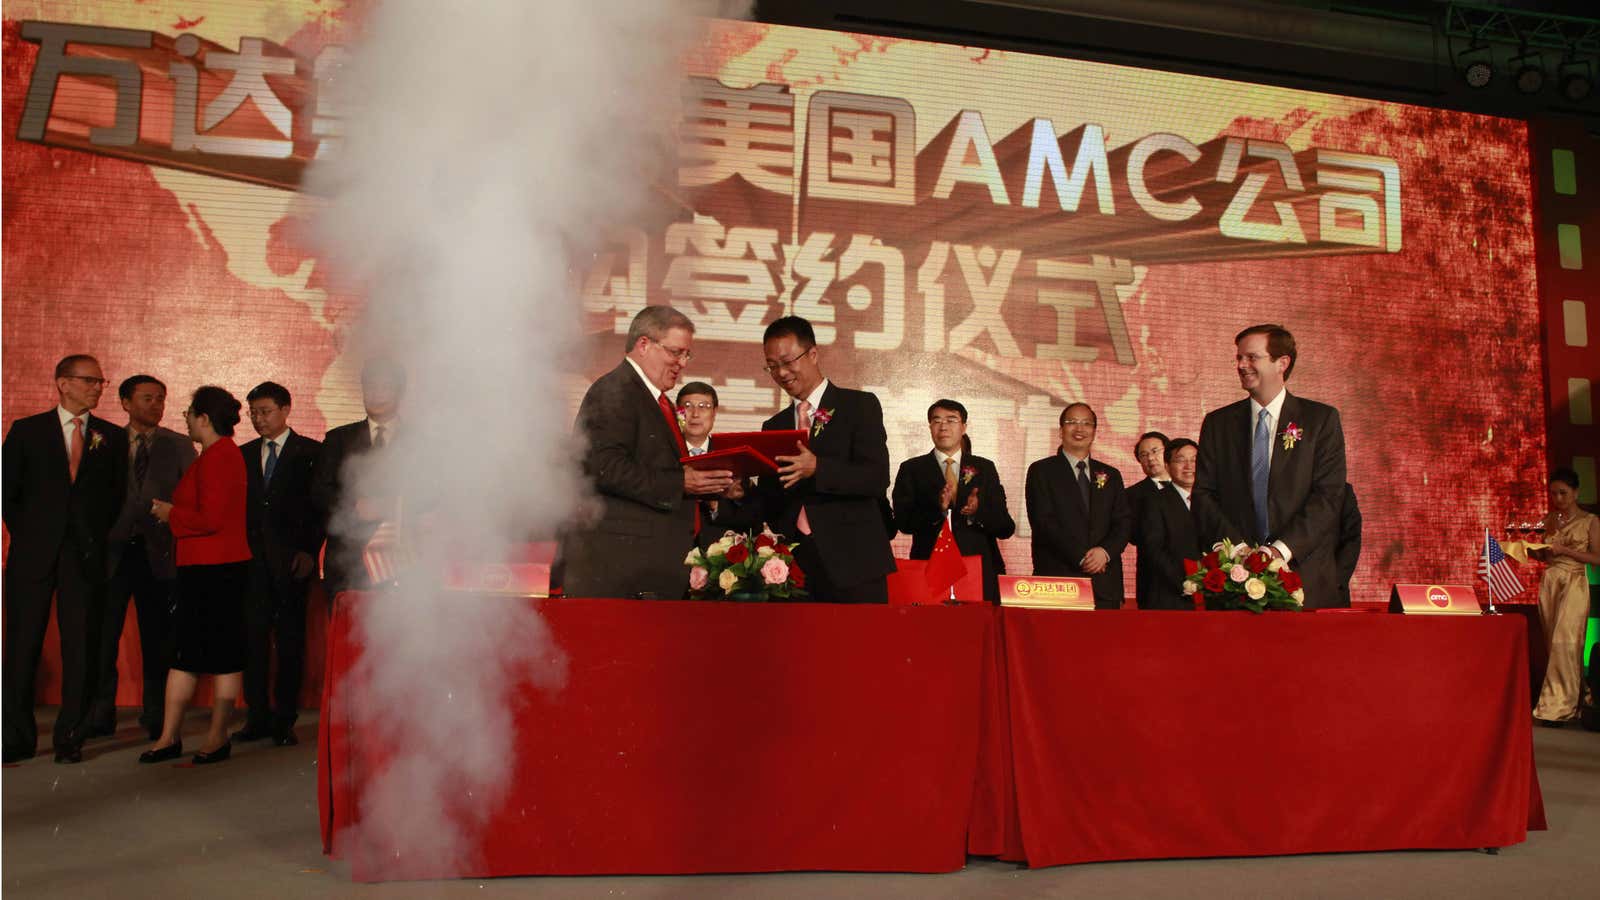 Dalian Wanda Group acquiring AMC Entertainment in May